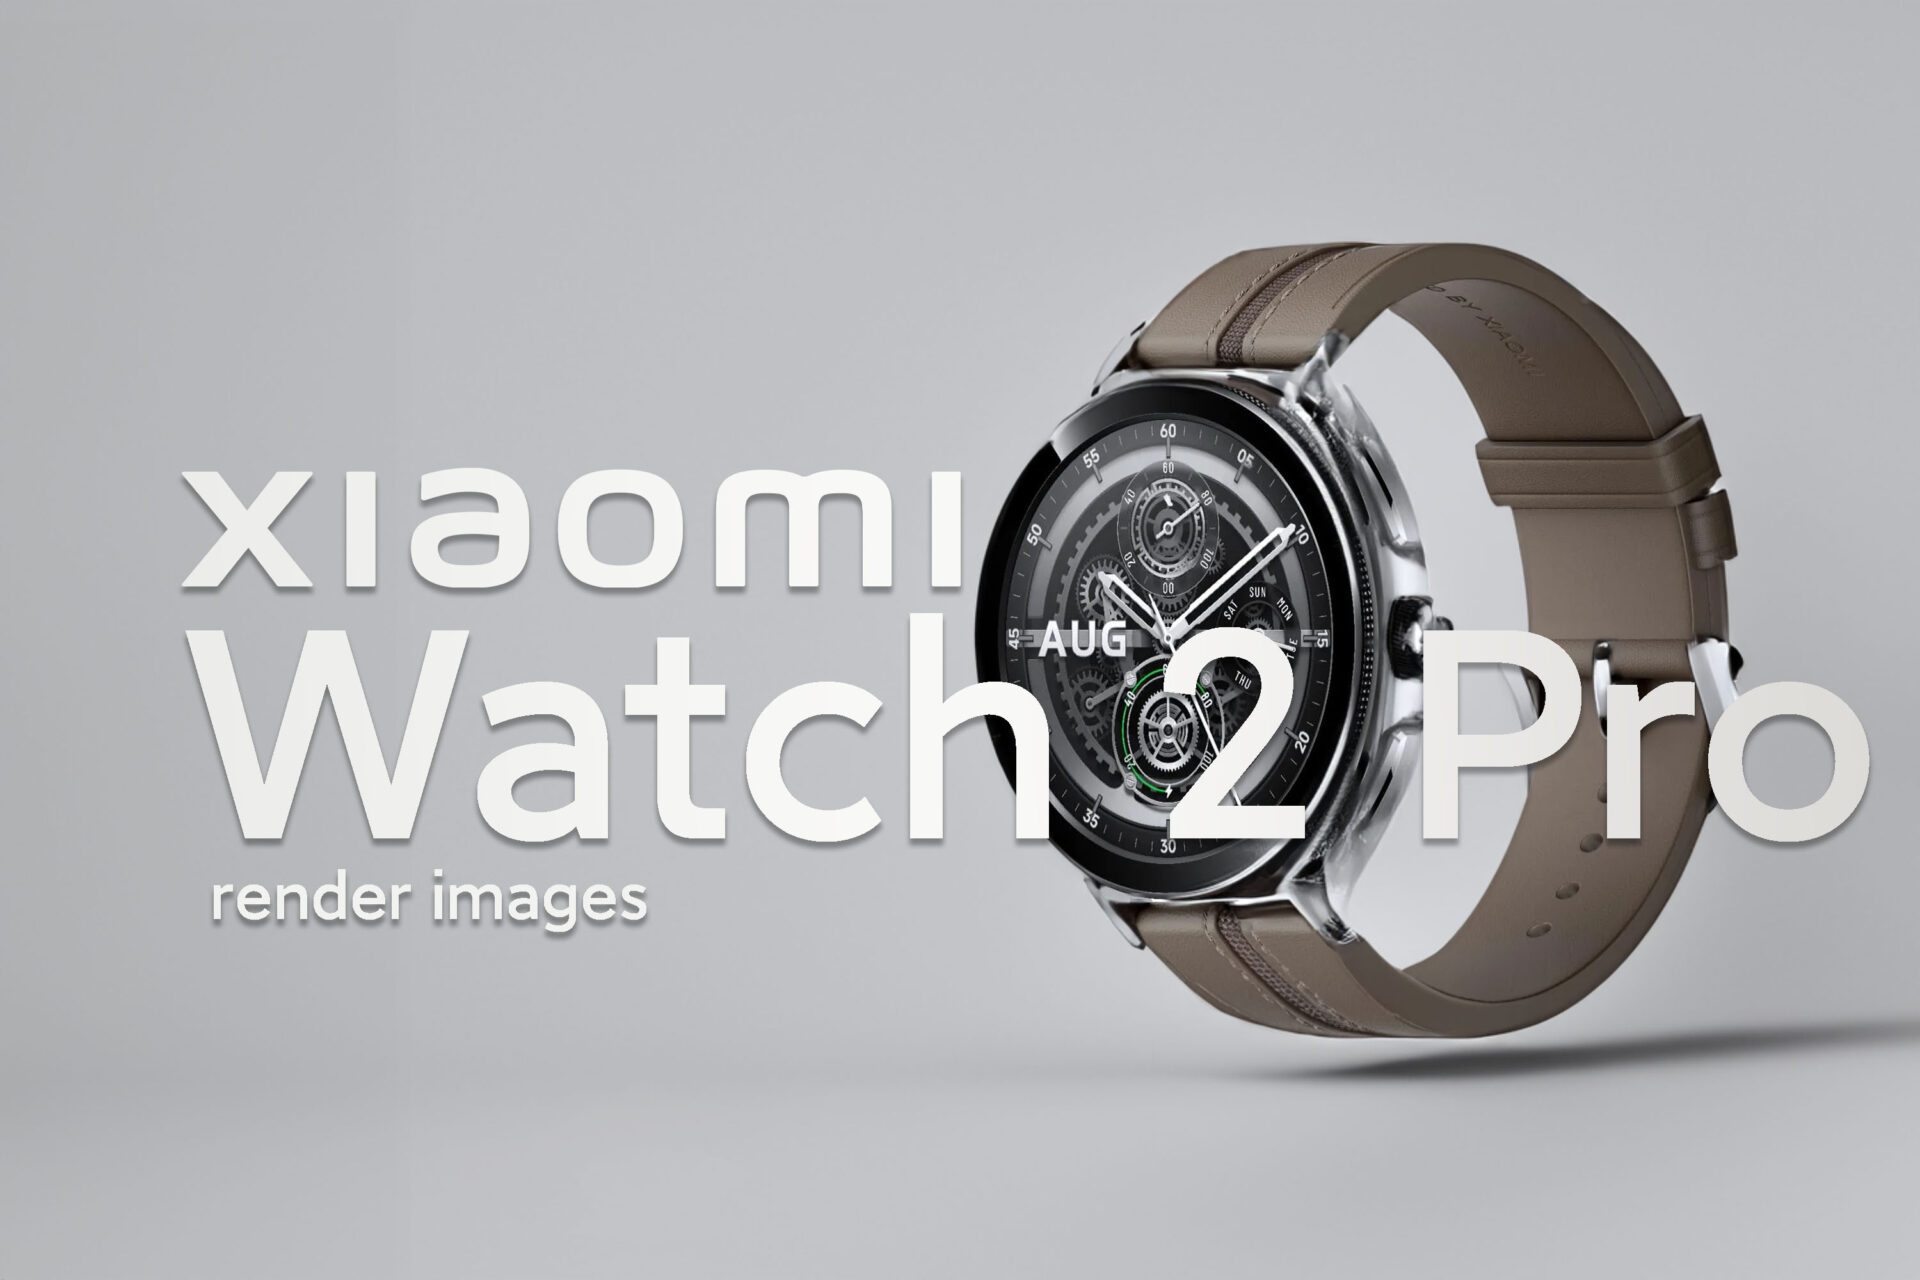 Xiaomi Watch 2 Pro render images reveal a premium design